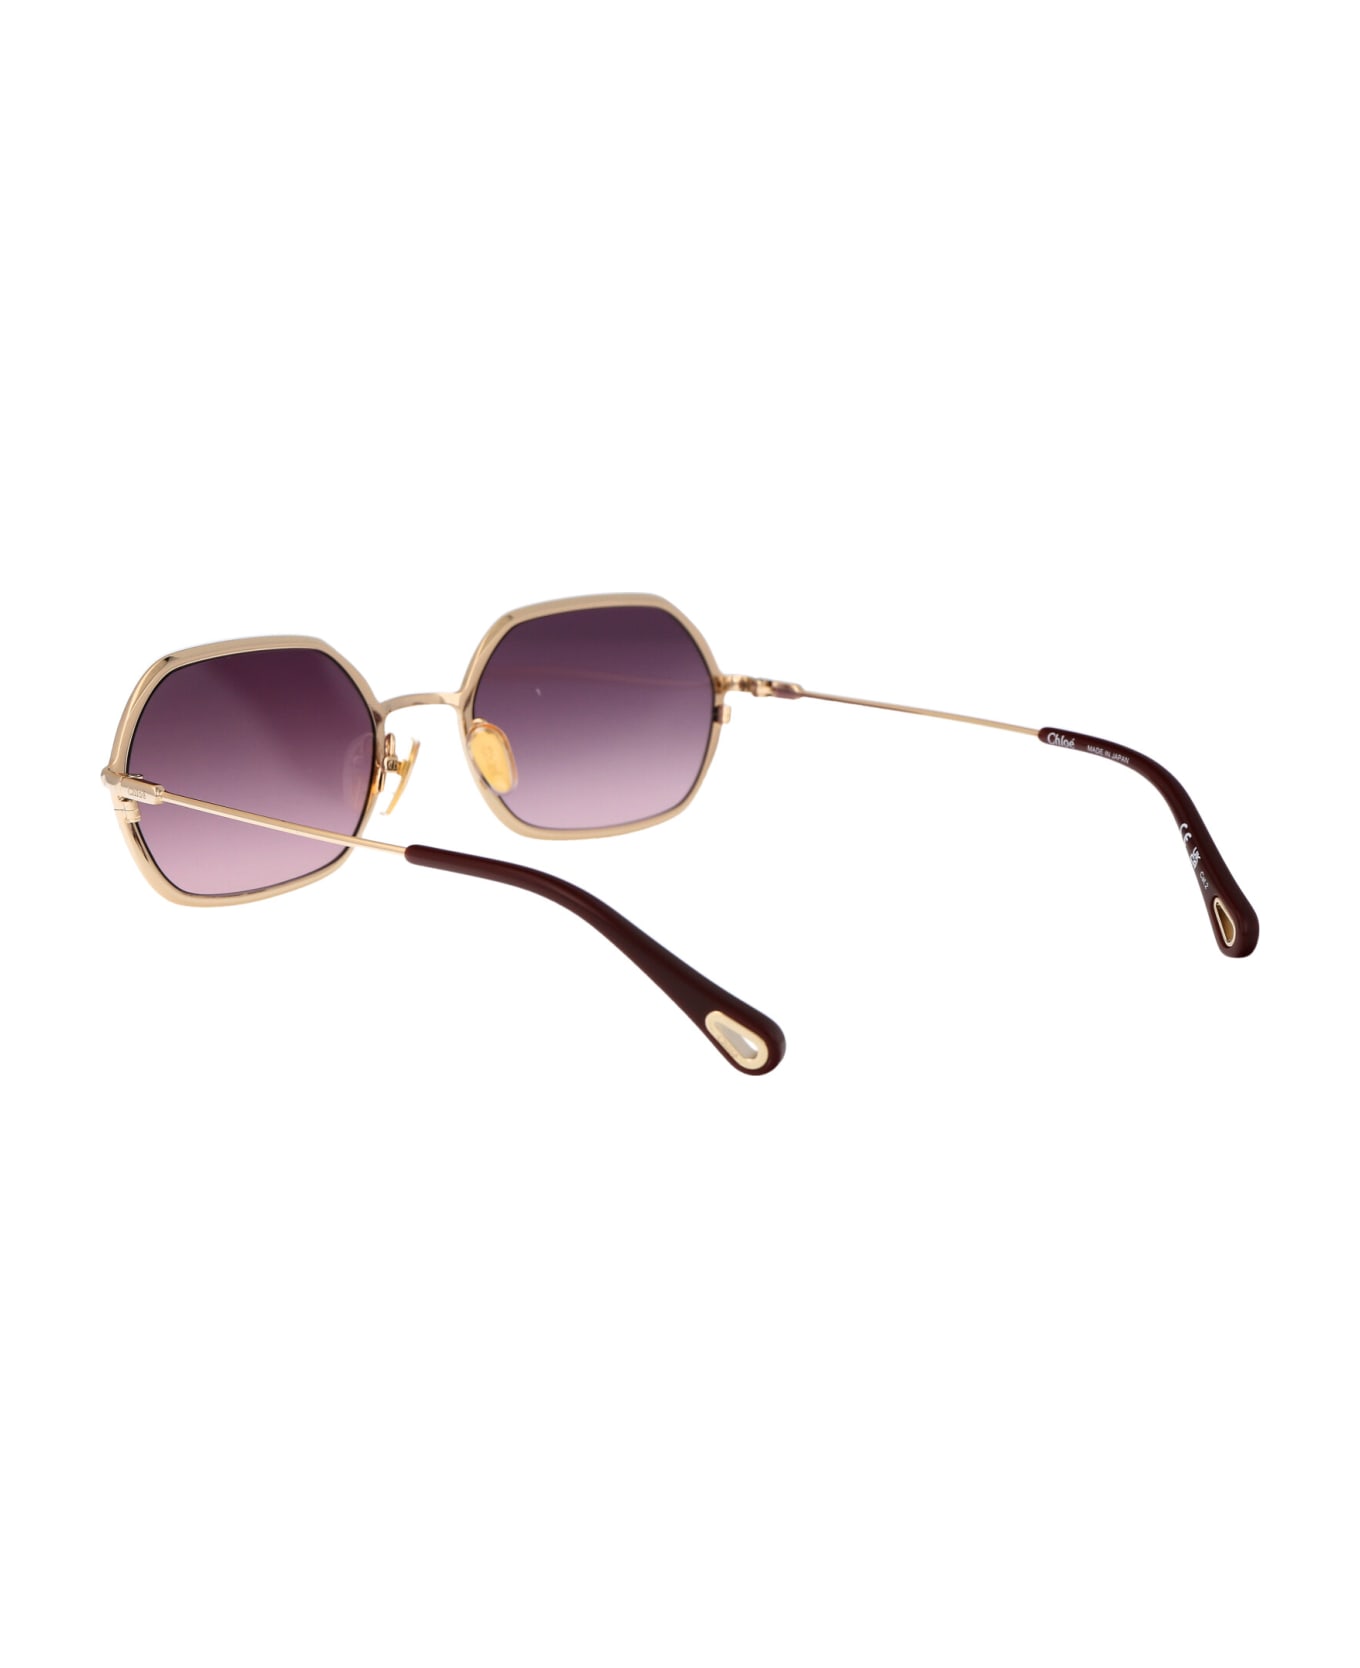 Chloé Eyewear Ch0231s Sunglasses - 003 GOLD GOLD VIOLET サングラス